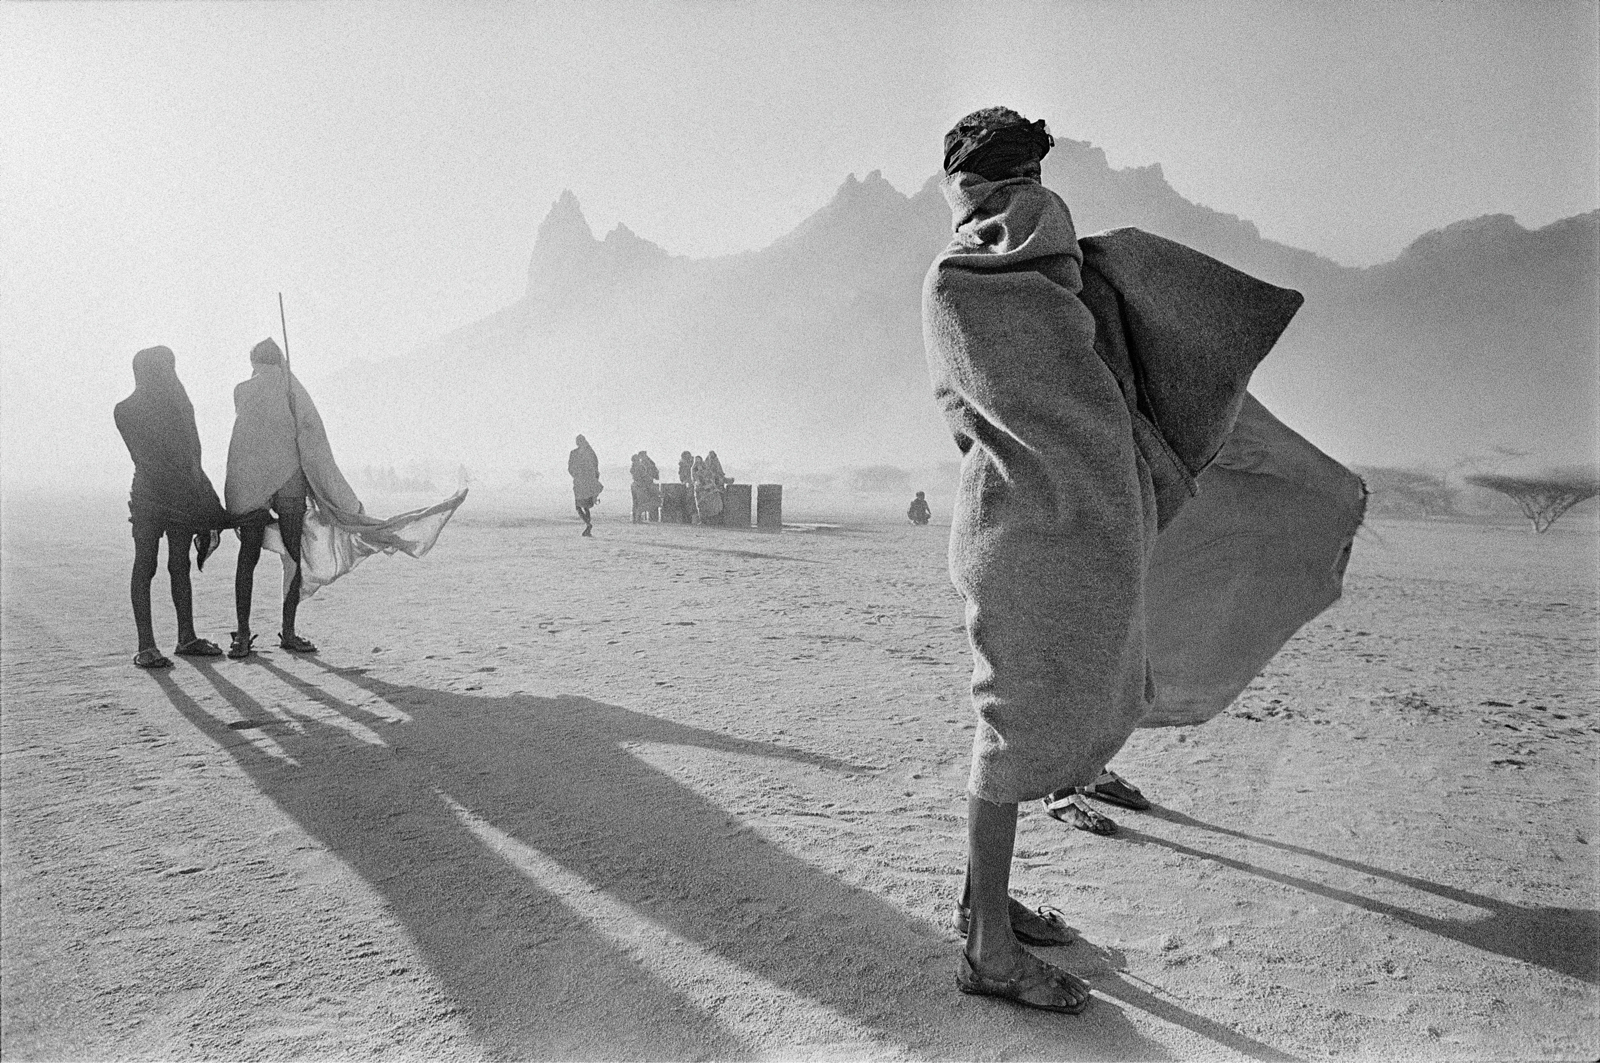 Sudan, 1985